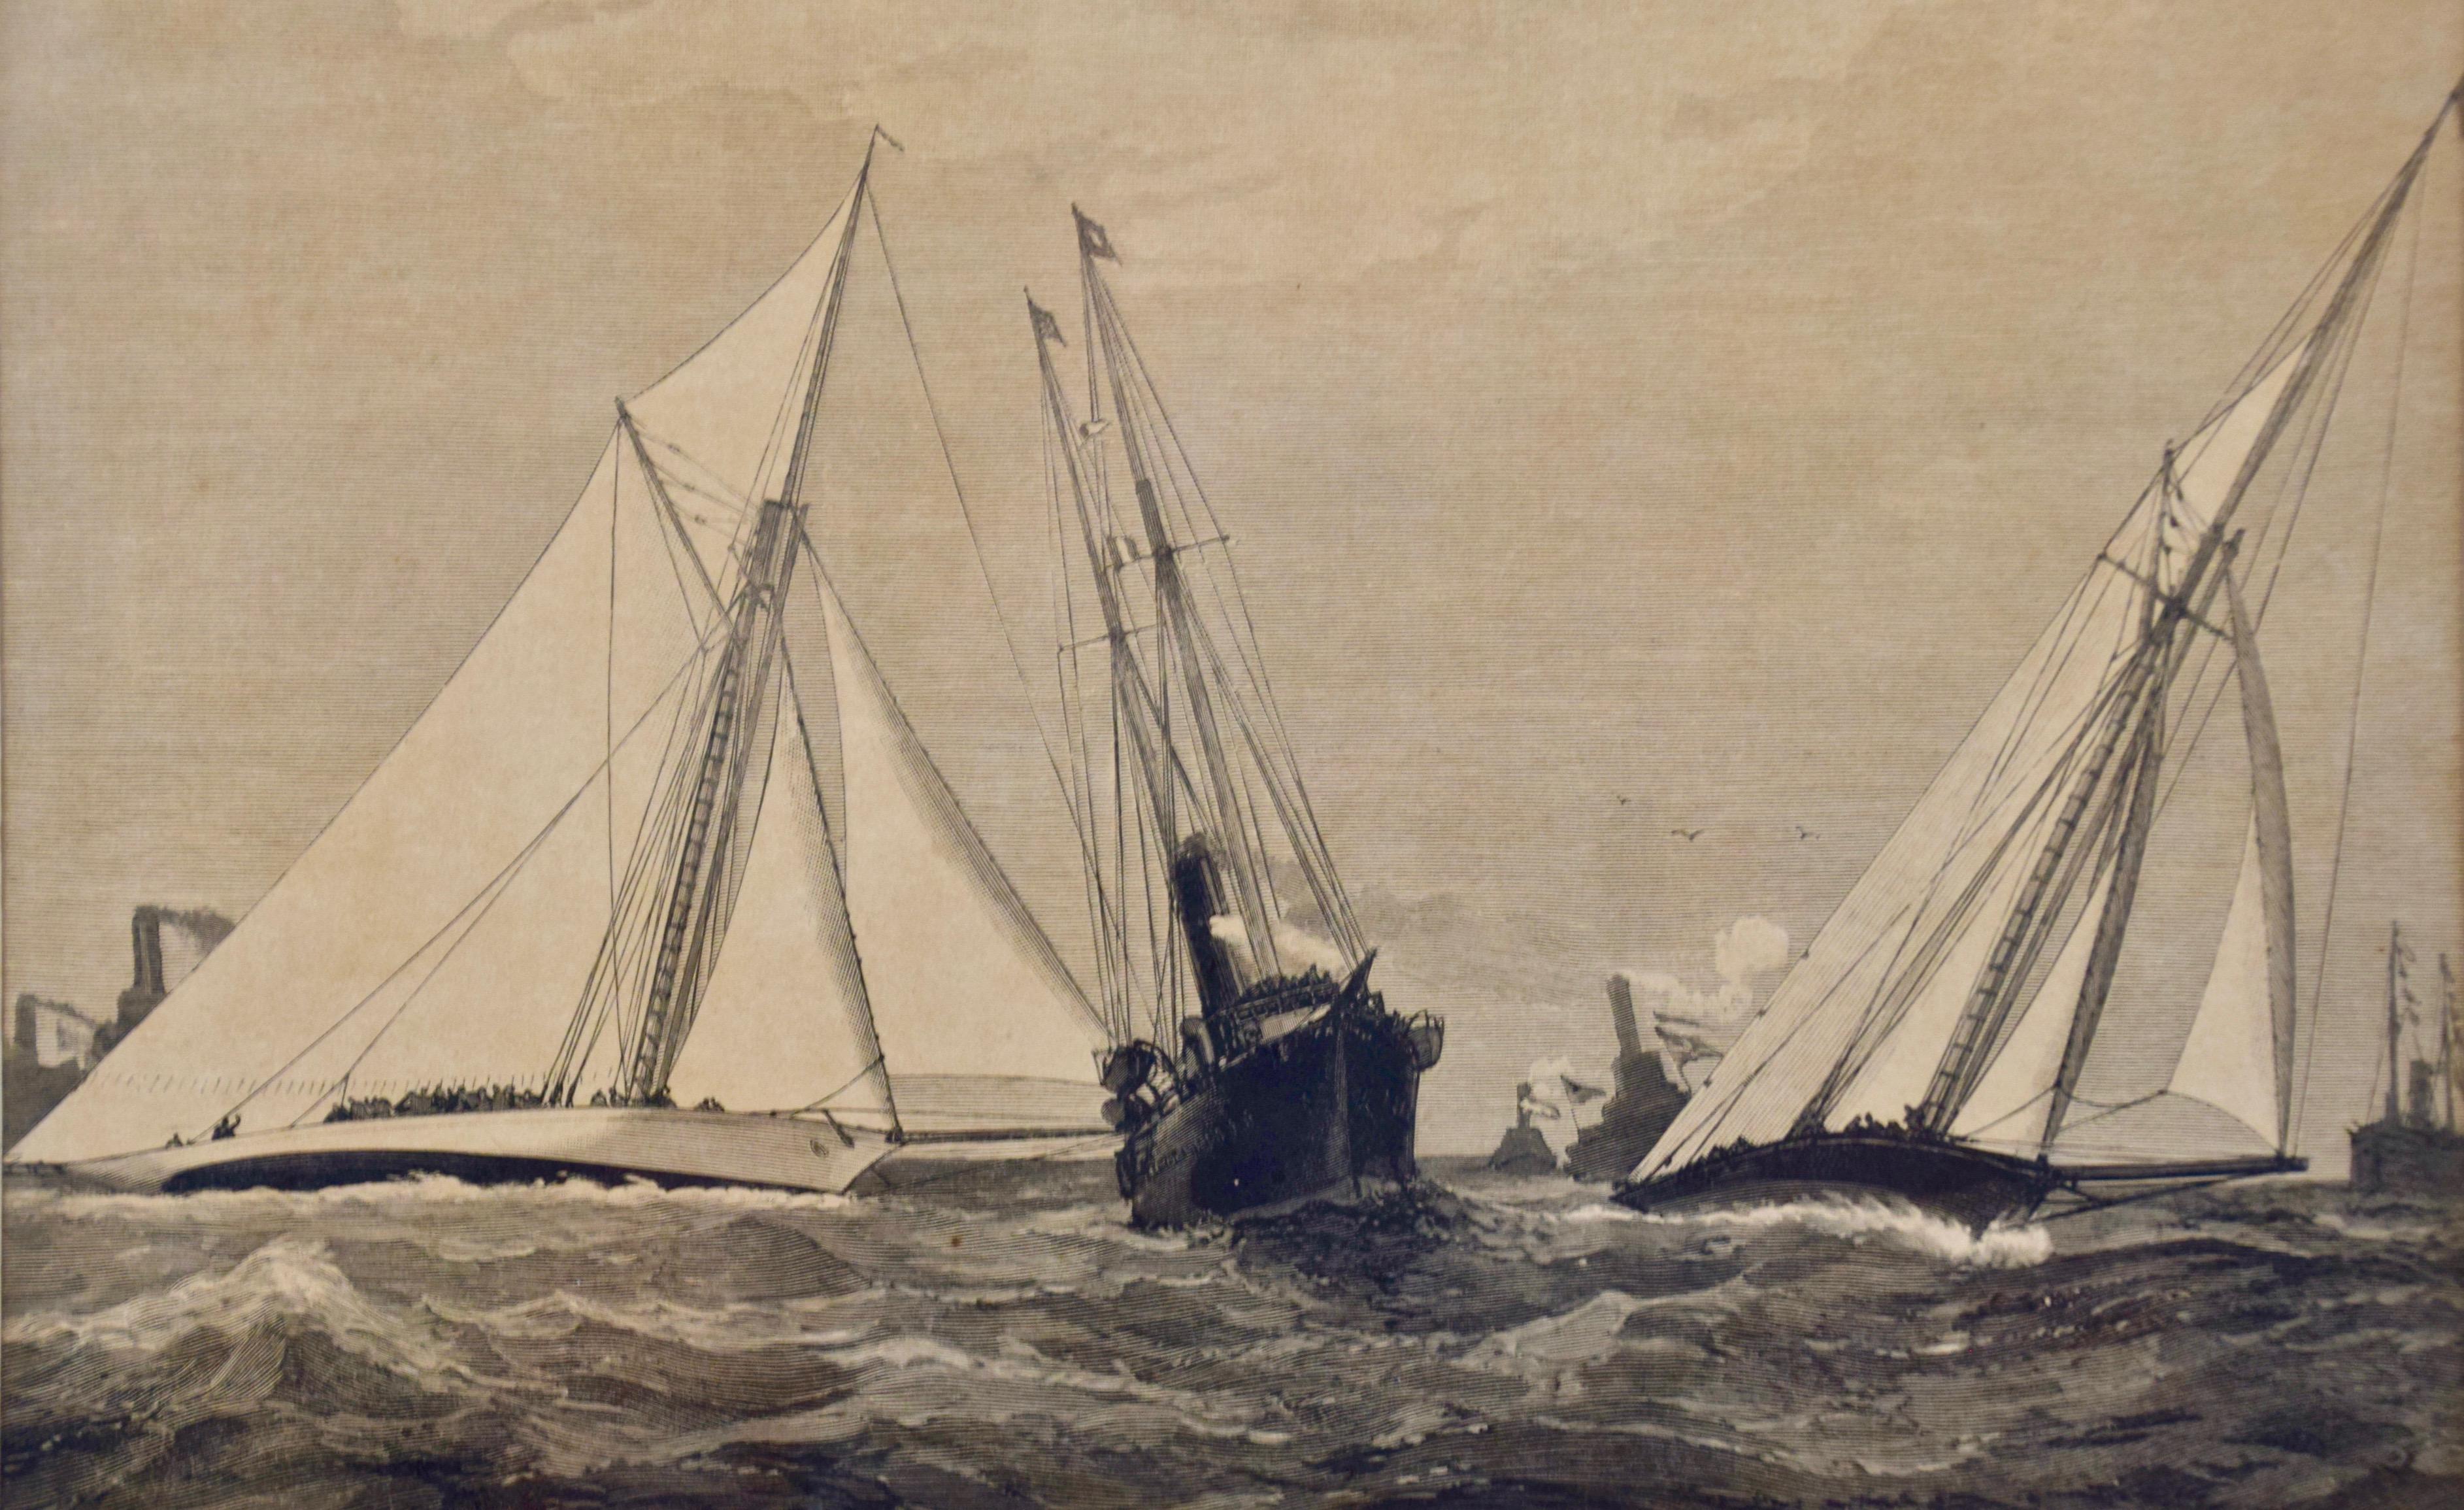 1885 America's Cup Sailing Yachts: Set of 3 Original 19th C. Engravings 2